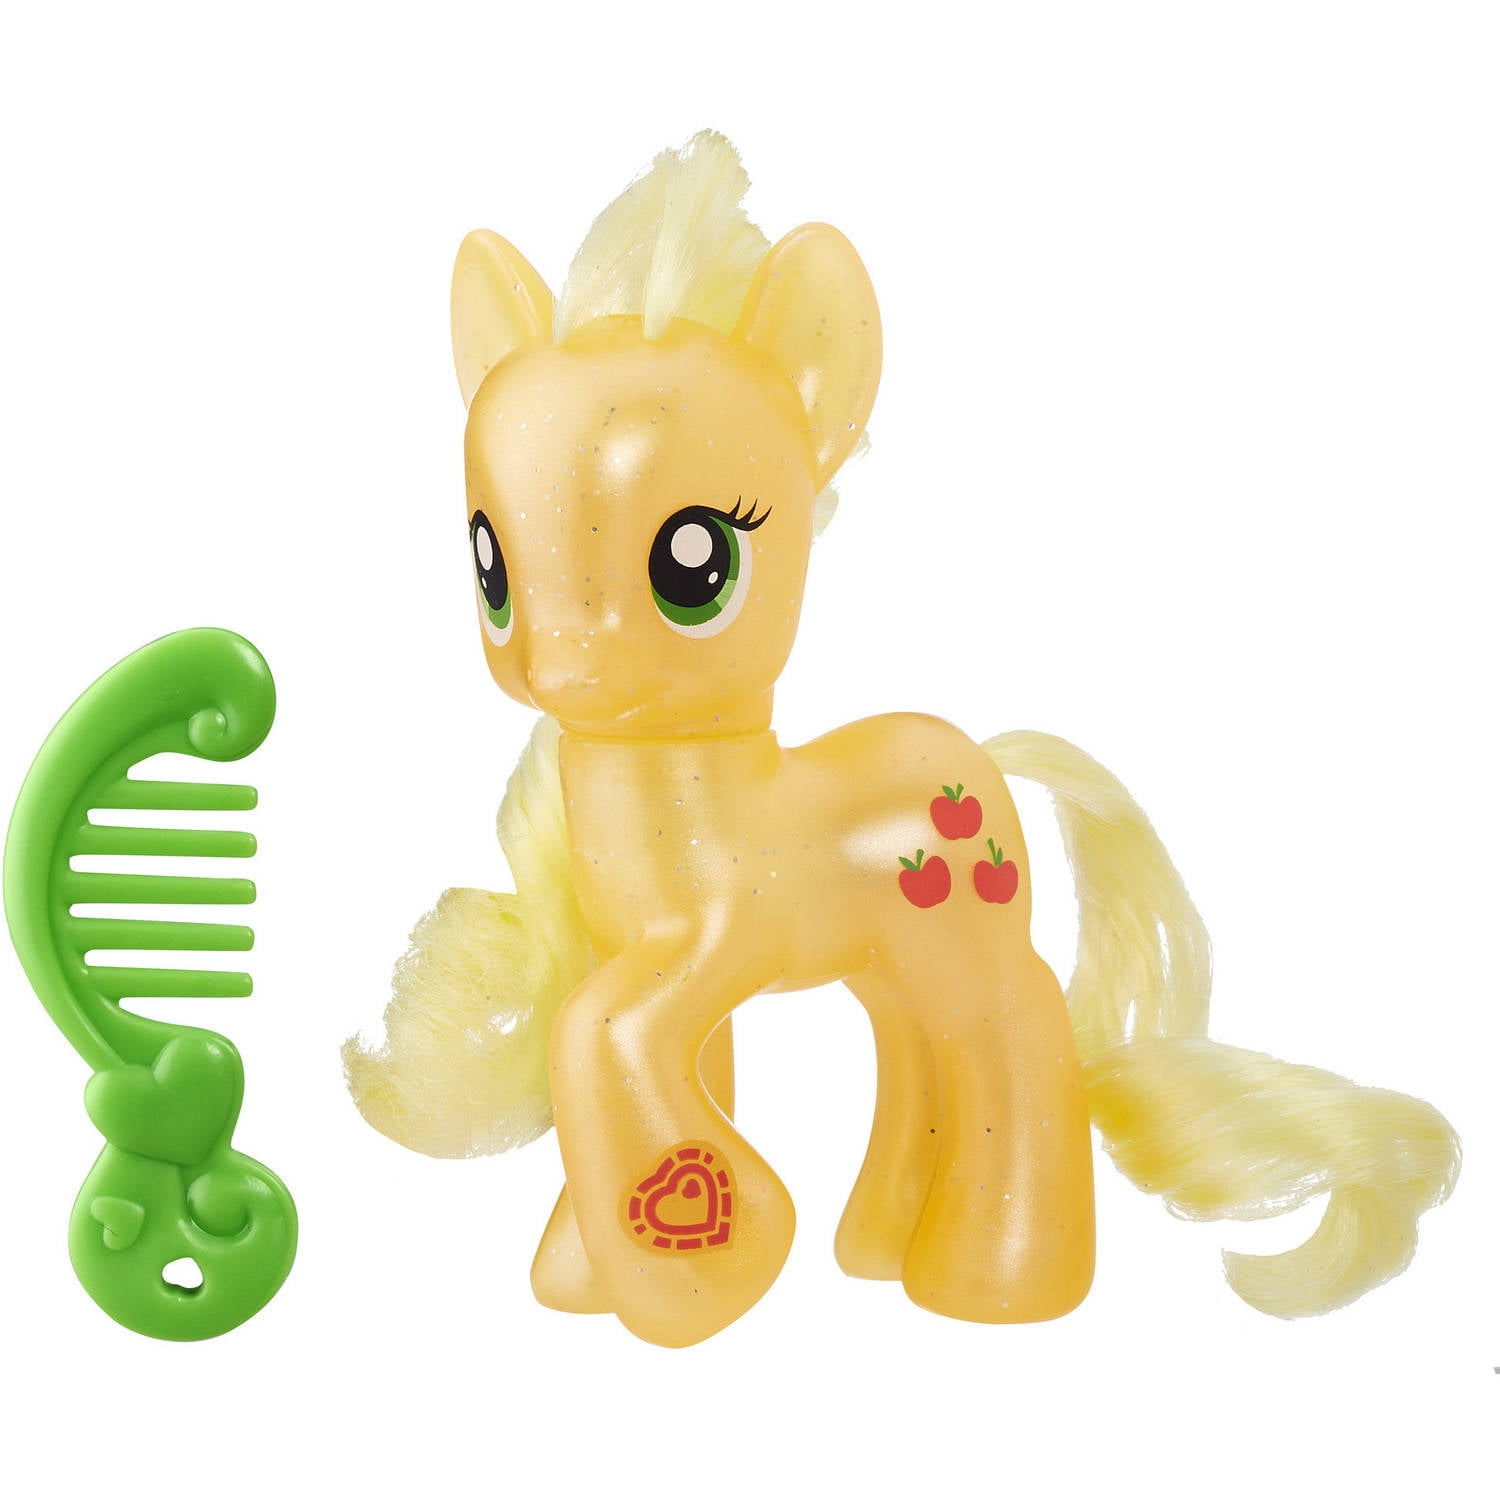 My Little Pony Mane Pony yellow toy Applejack Classic Figure 